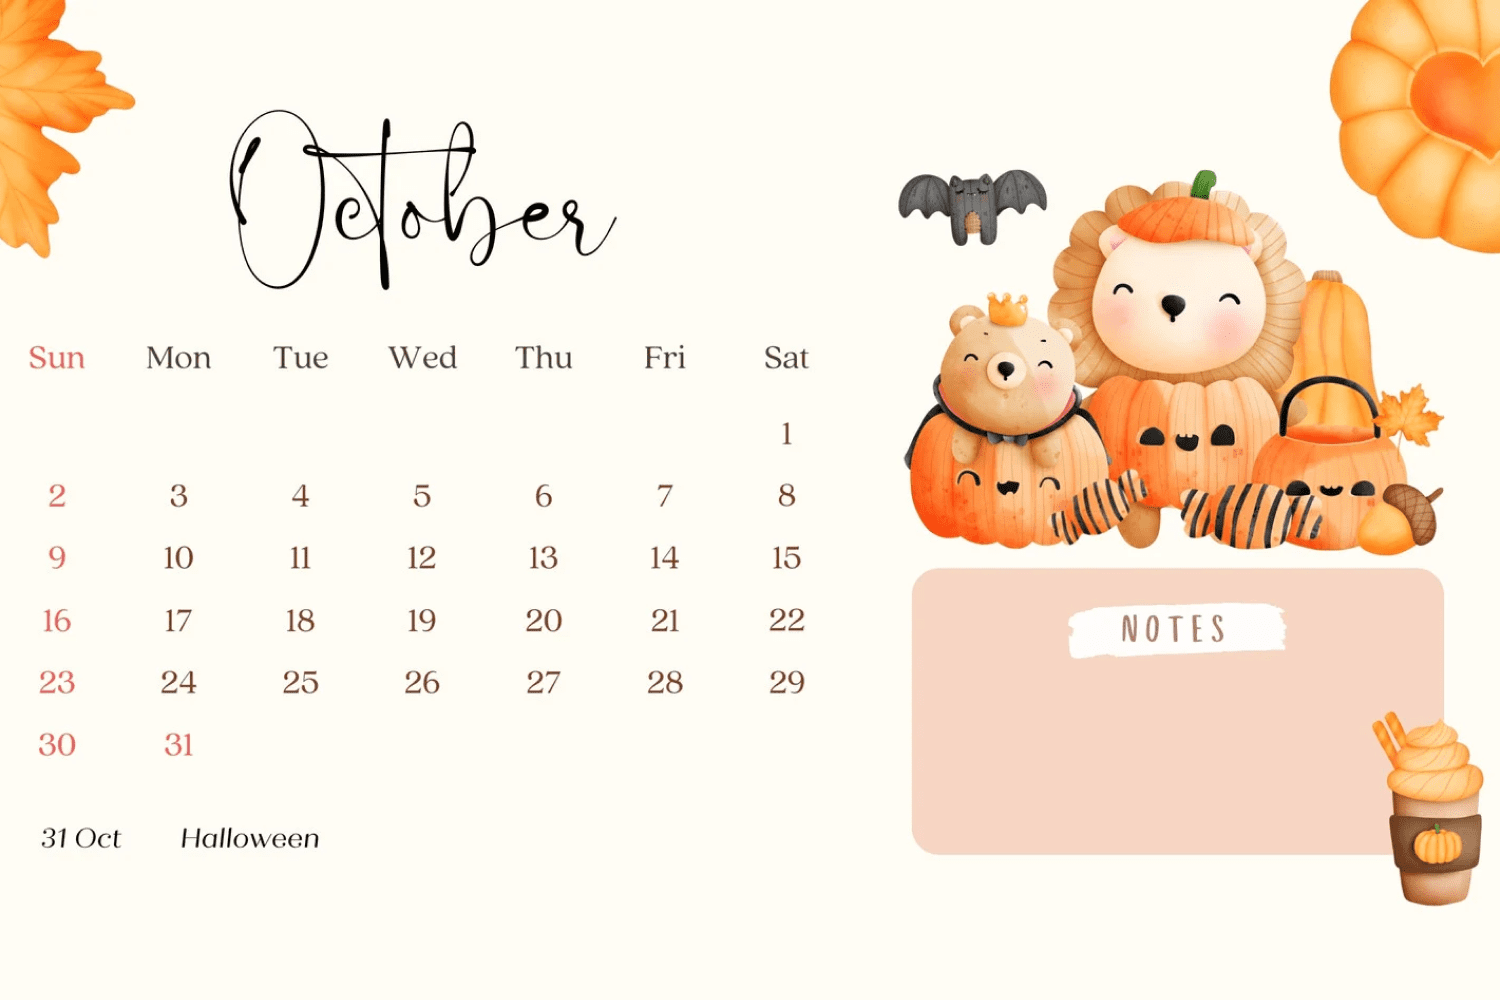 October calendar with cute pumpkins, teddy bears and candies.